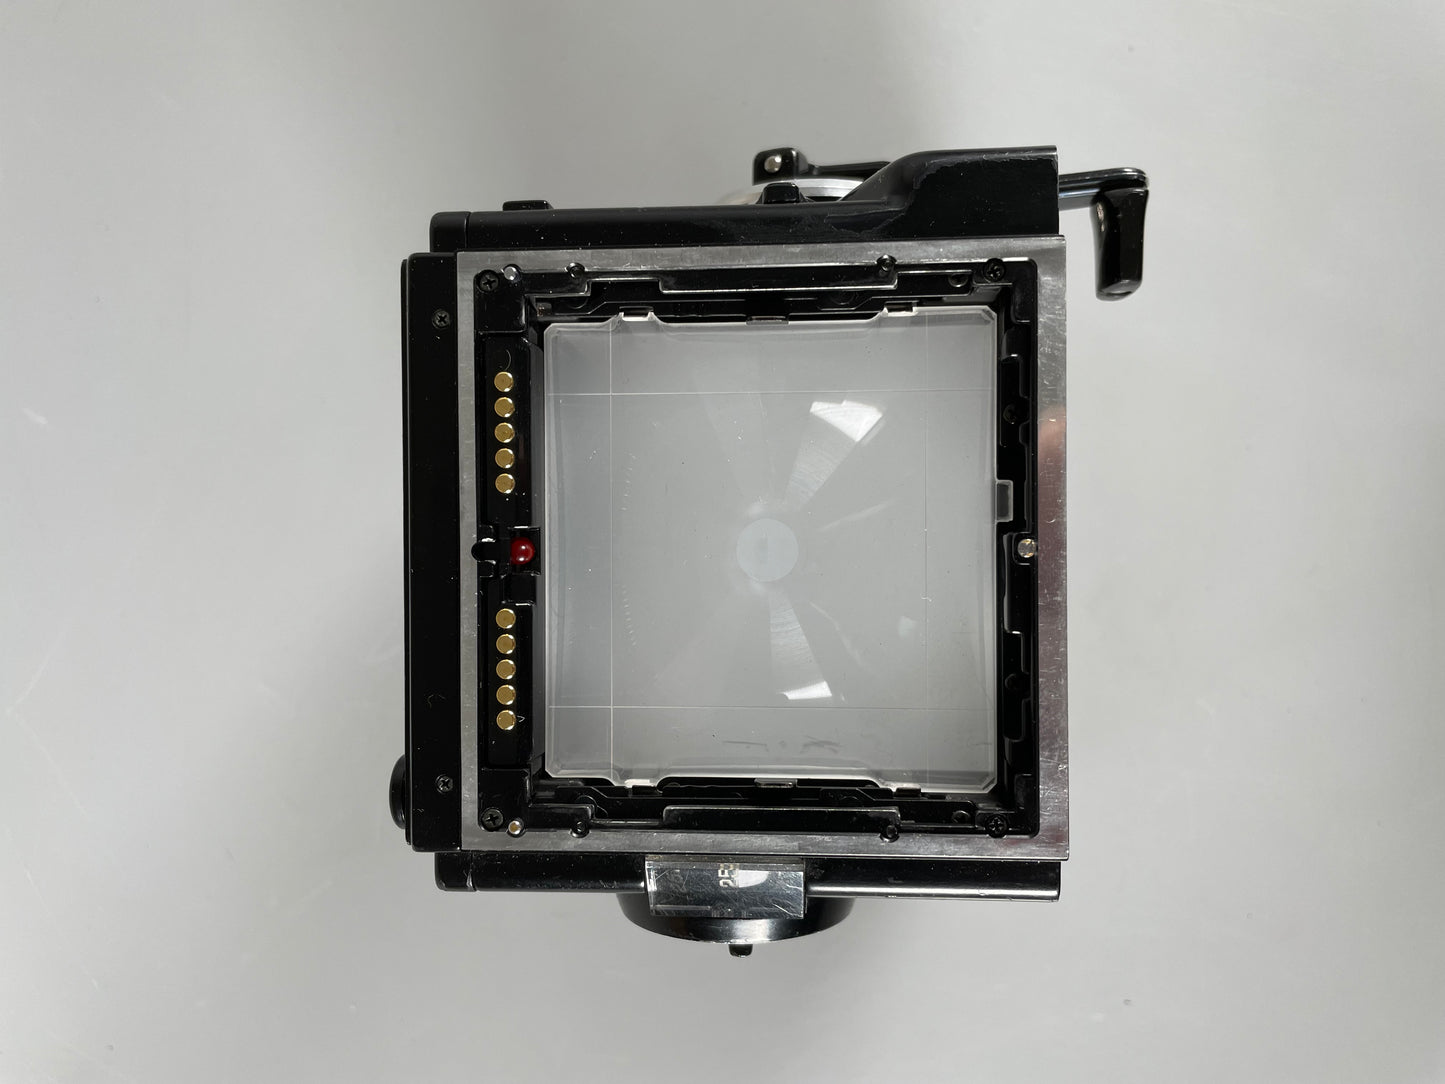 Zenza Bronica SQ-A medium format camera body